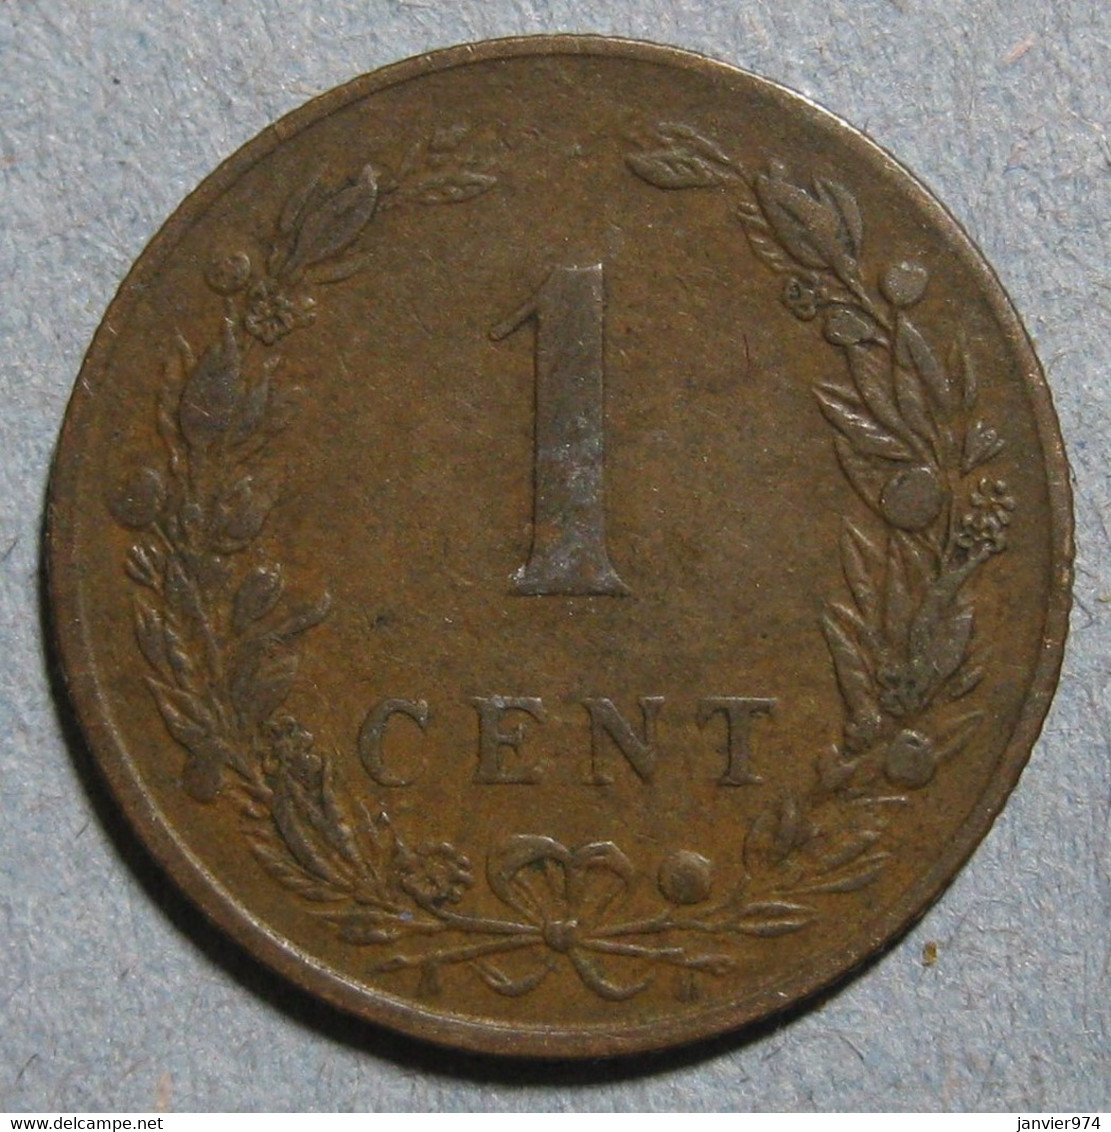 Pays-Bas, 1 Cent 1916, WILHELMINA I. Bronze. KM# 152 - 1 Cent